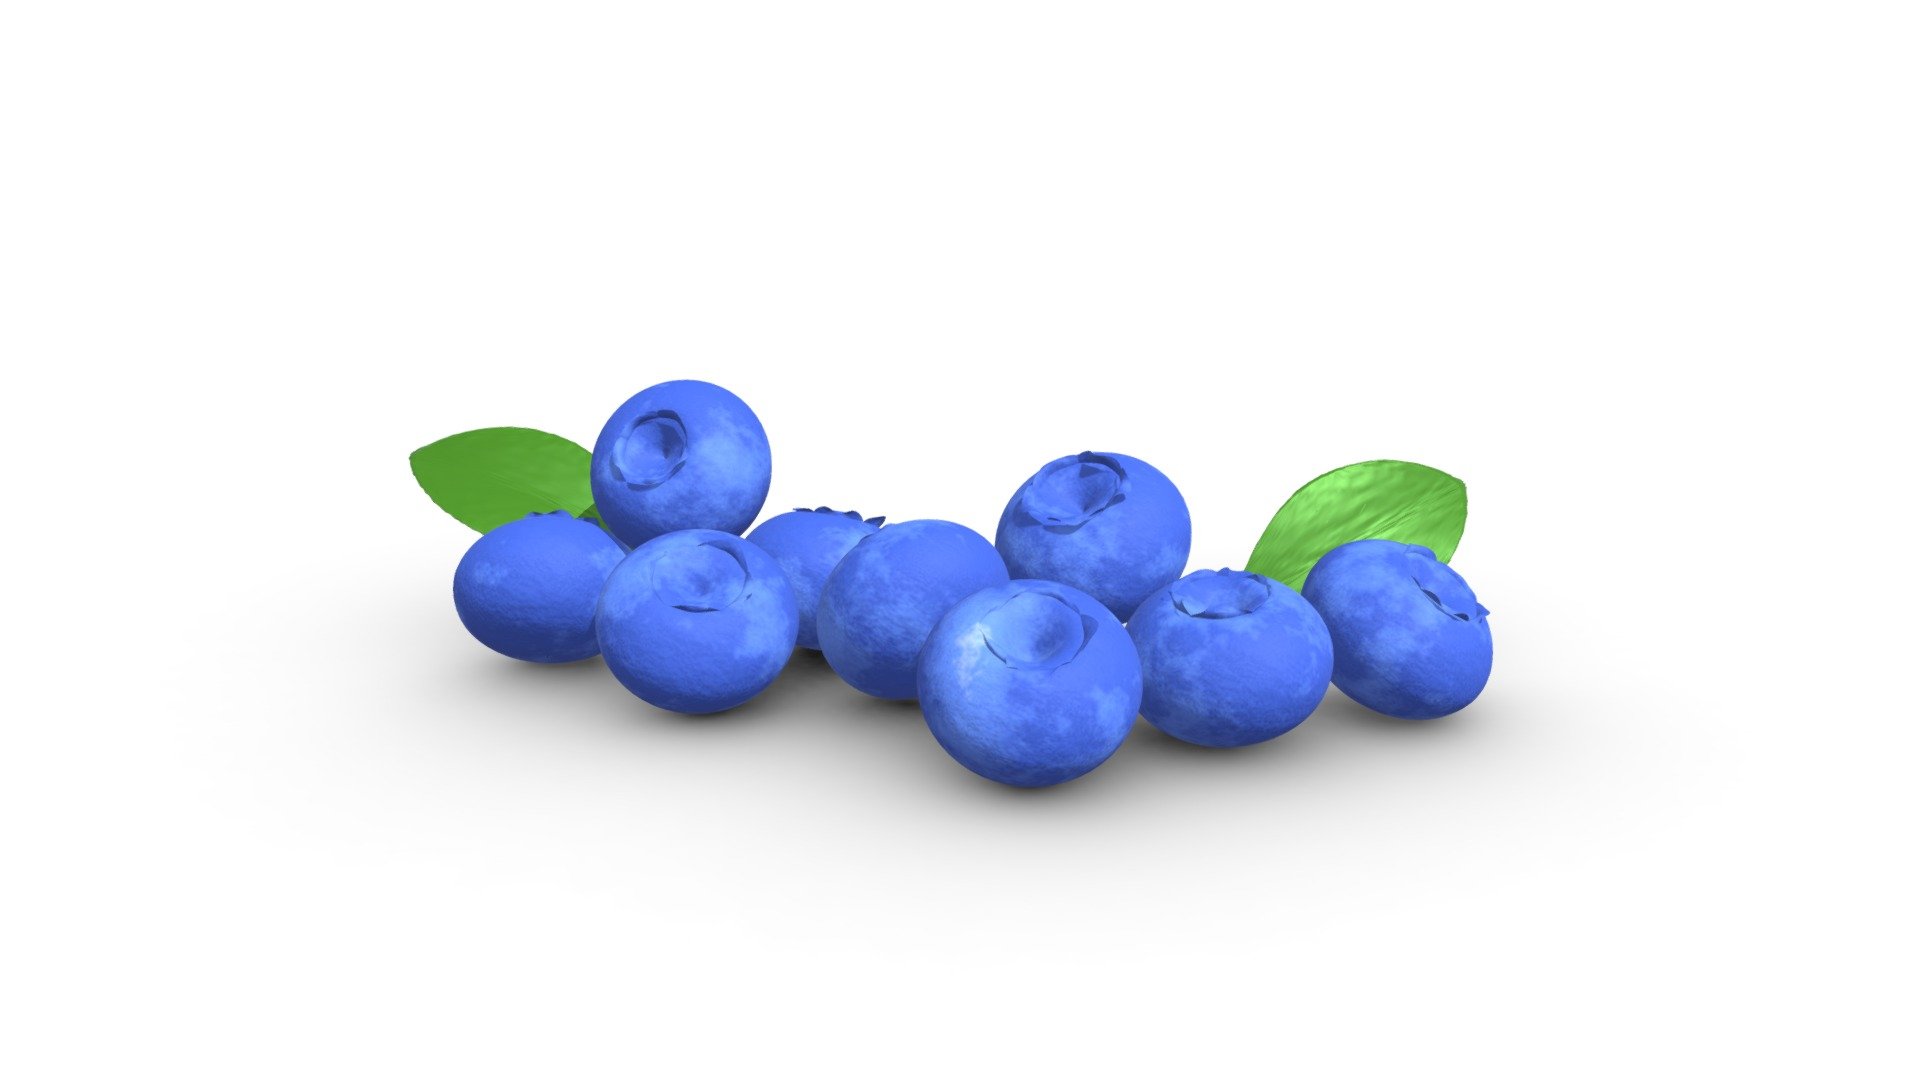 🍐🍌Fresh fruit series🍋🍓 Blueberries 3D model made in blender with geometry node texture 3d model